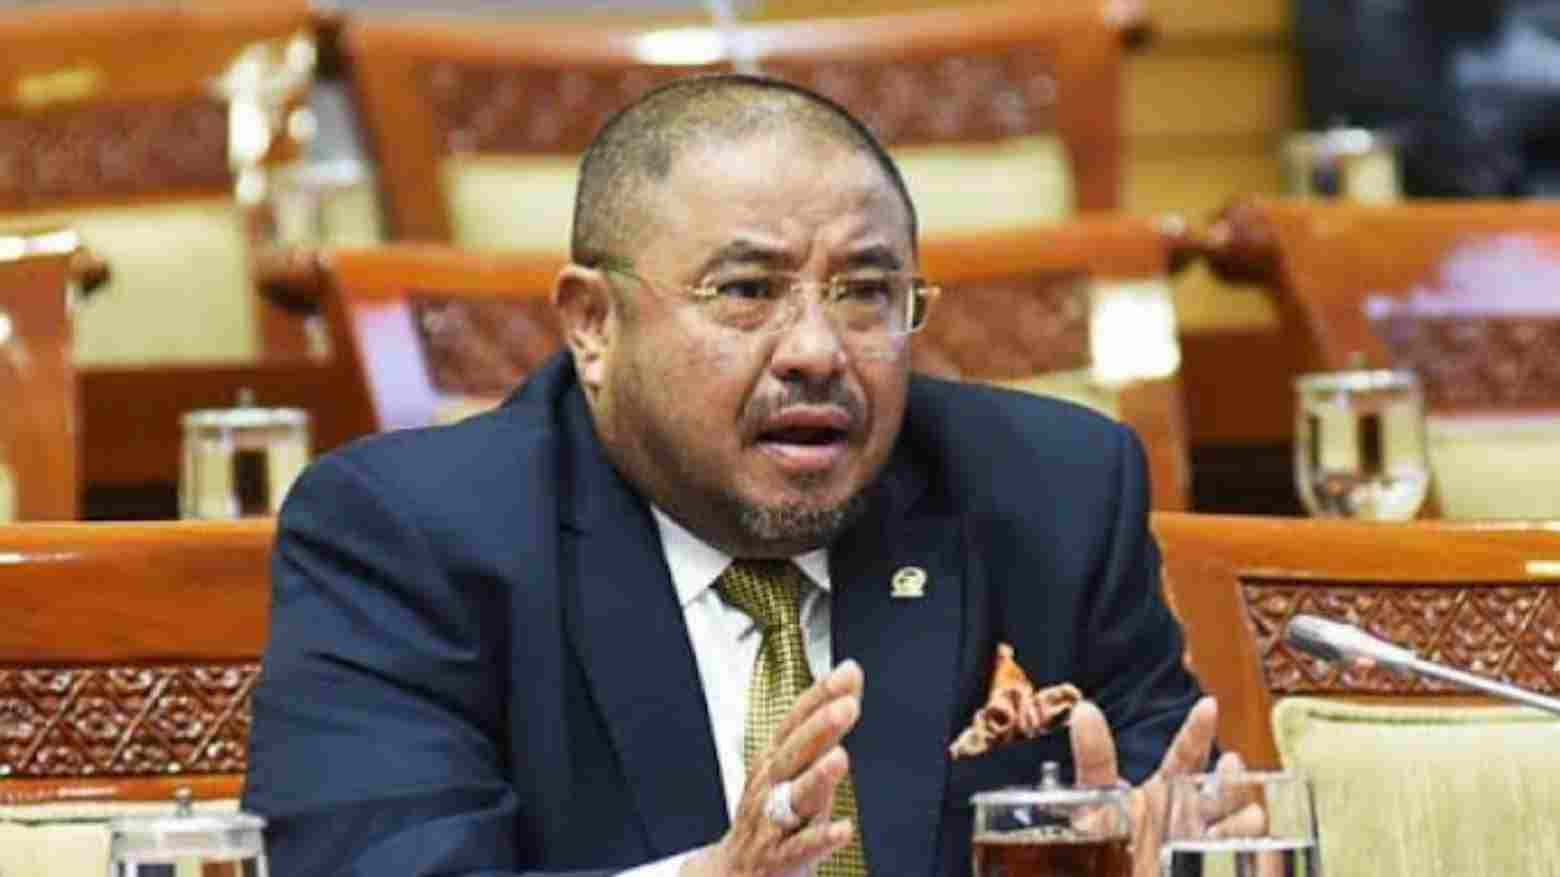 Soal Azis Syamsuddin, MKD DPR: Kita Siapkan Asas Praduga Tak Bersalah